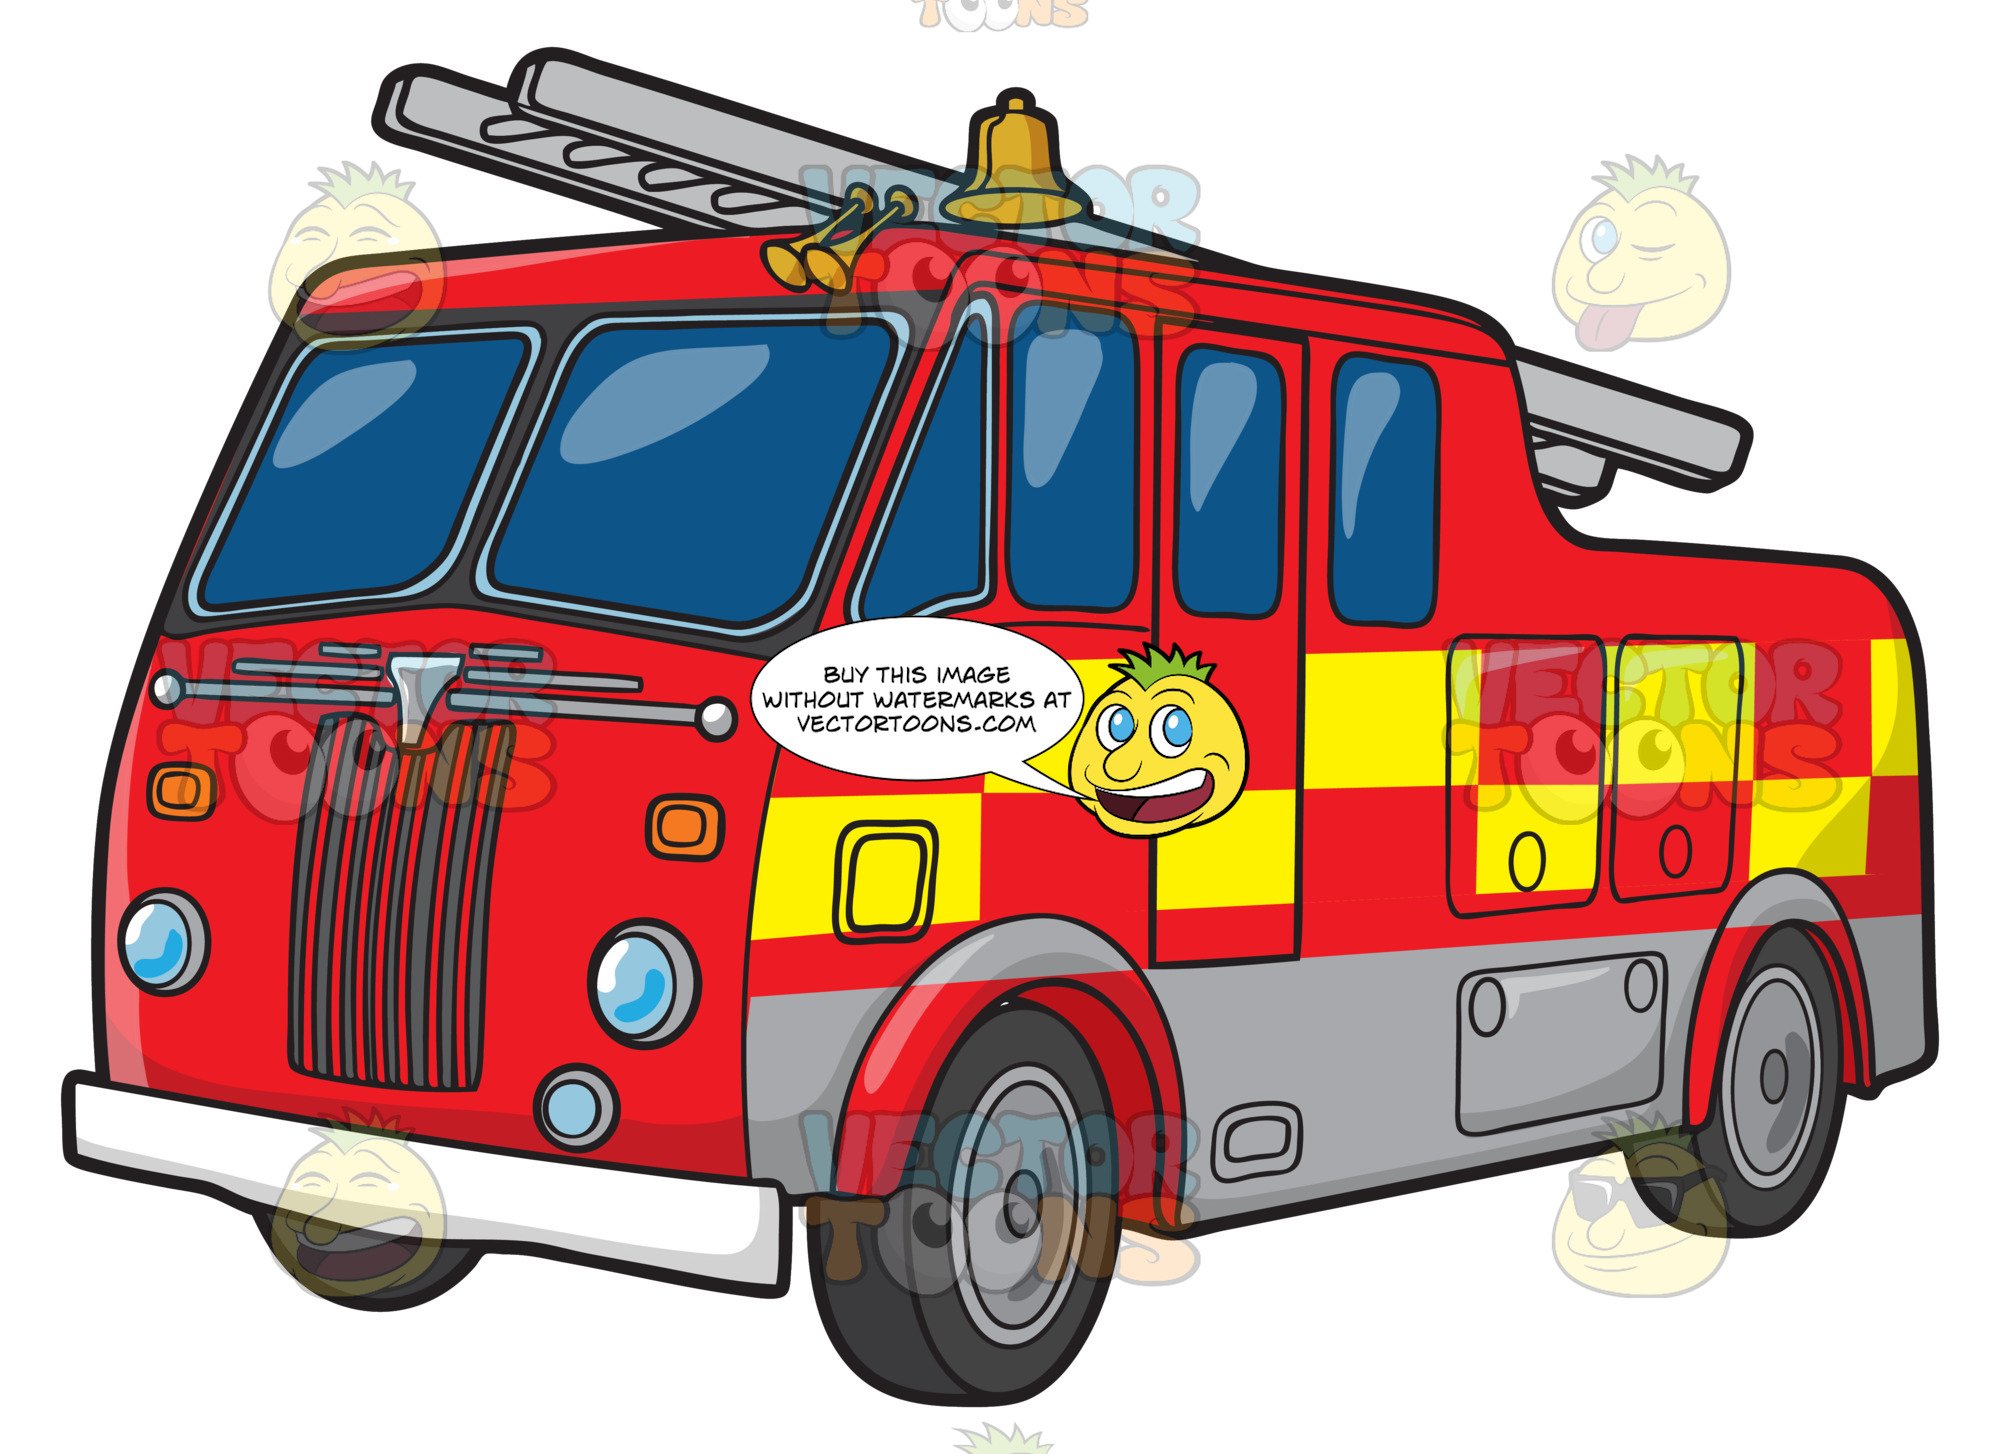 A British Fire Truck